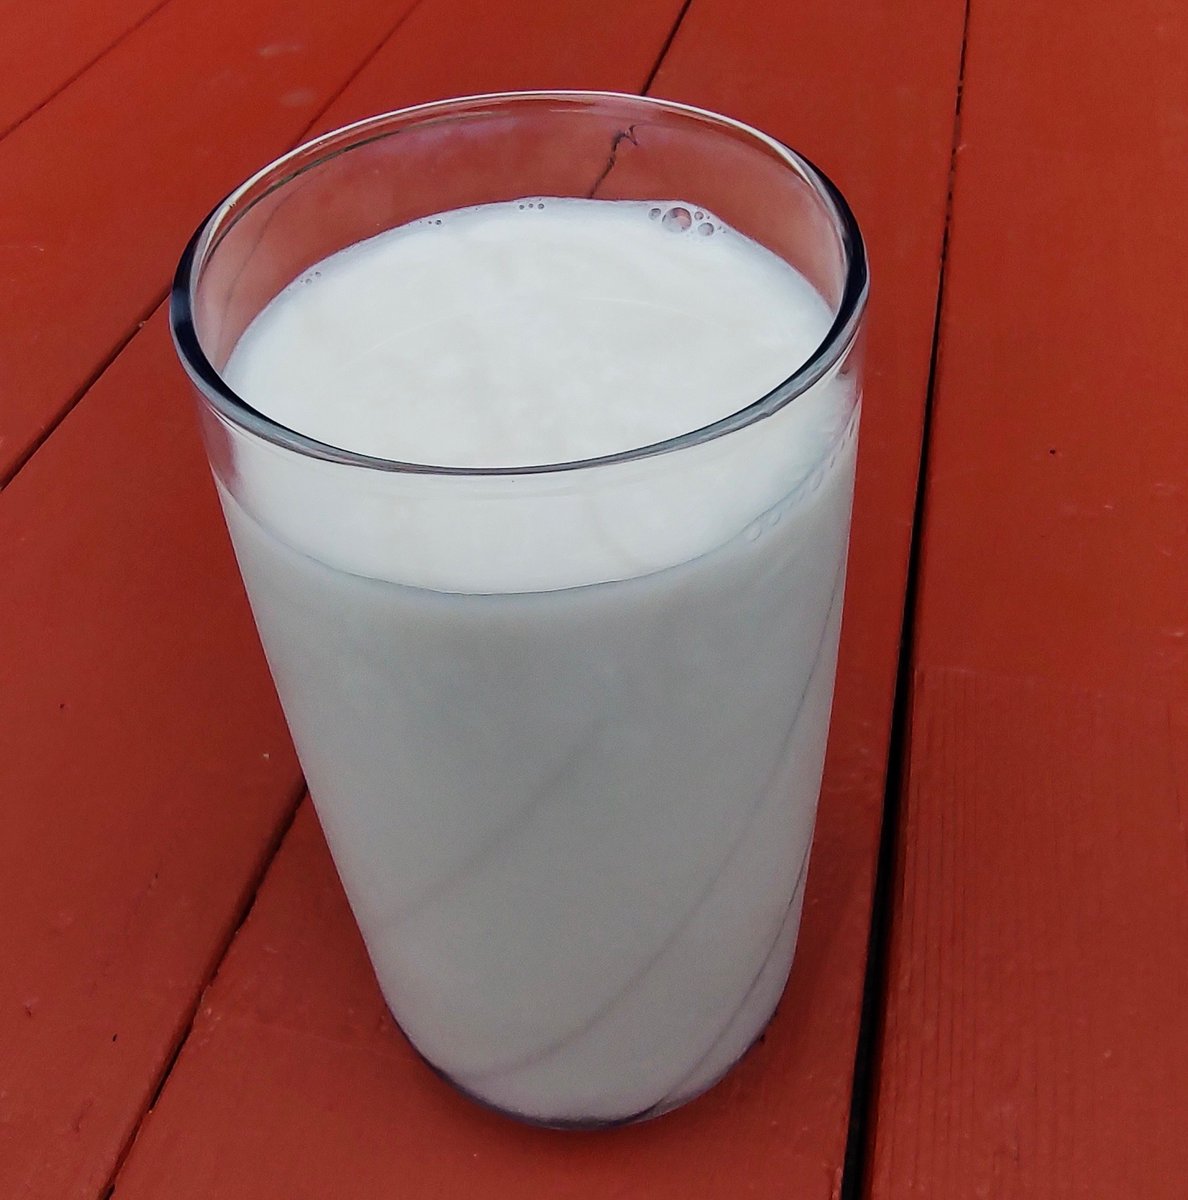 #AVCcalendar Happy #WorldPlantMilkDay! What's your favorite type of nondairy milk?